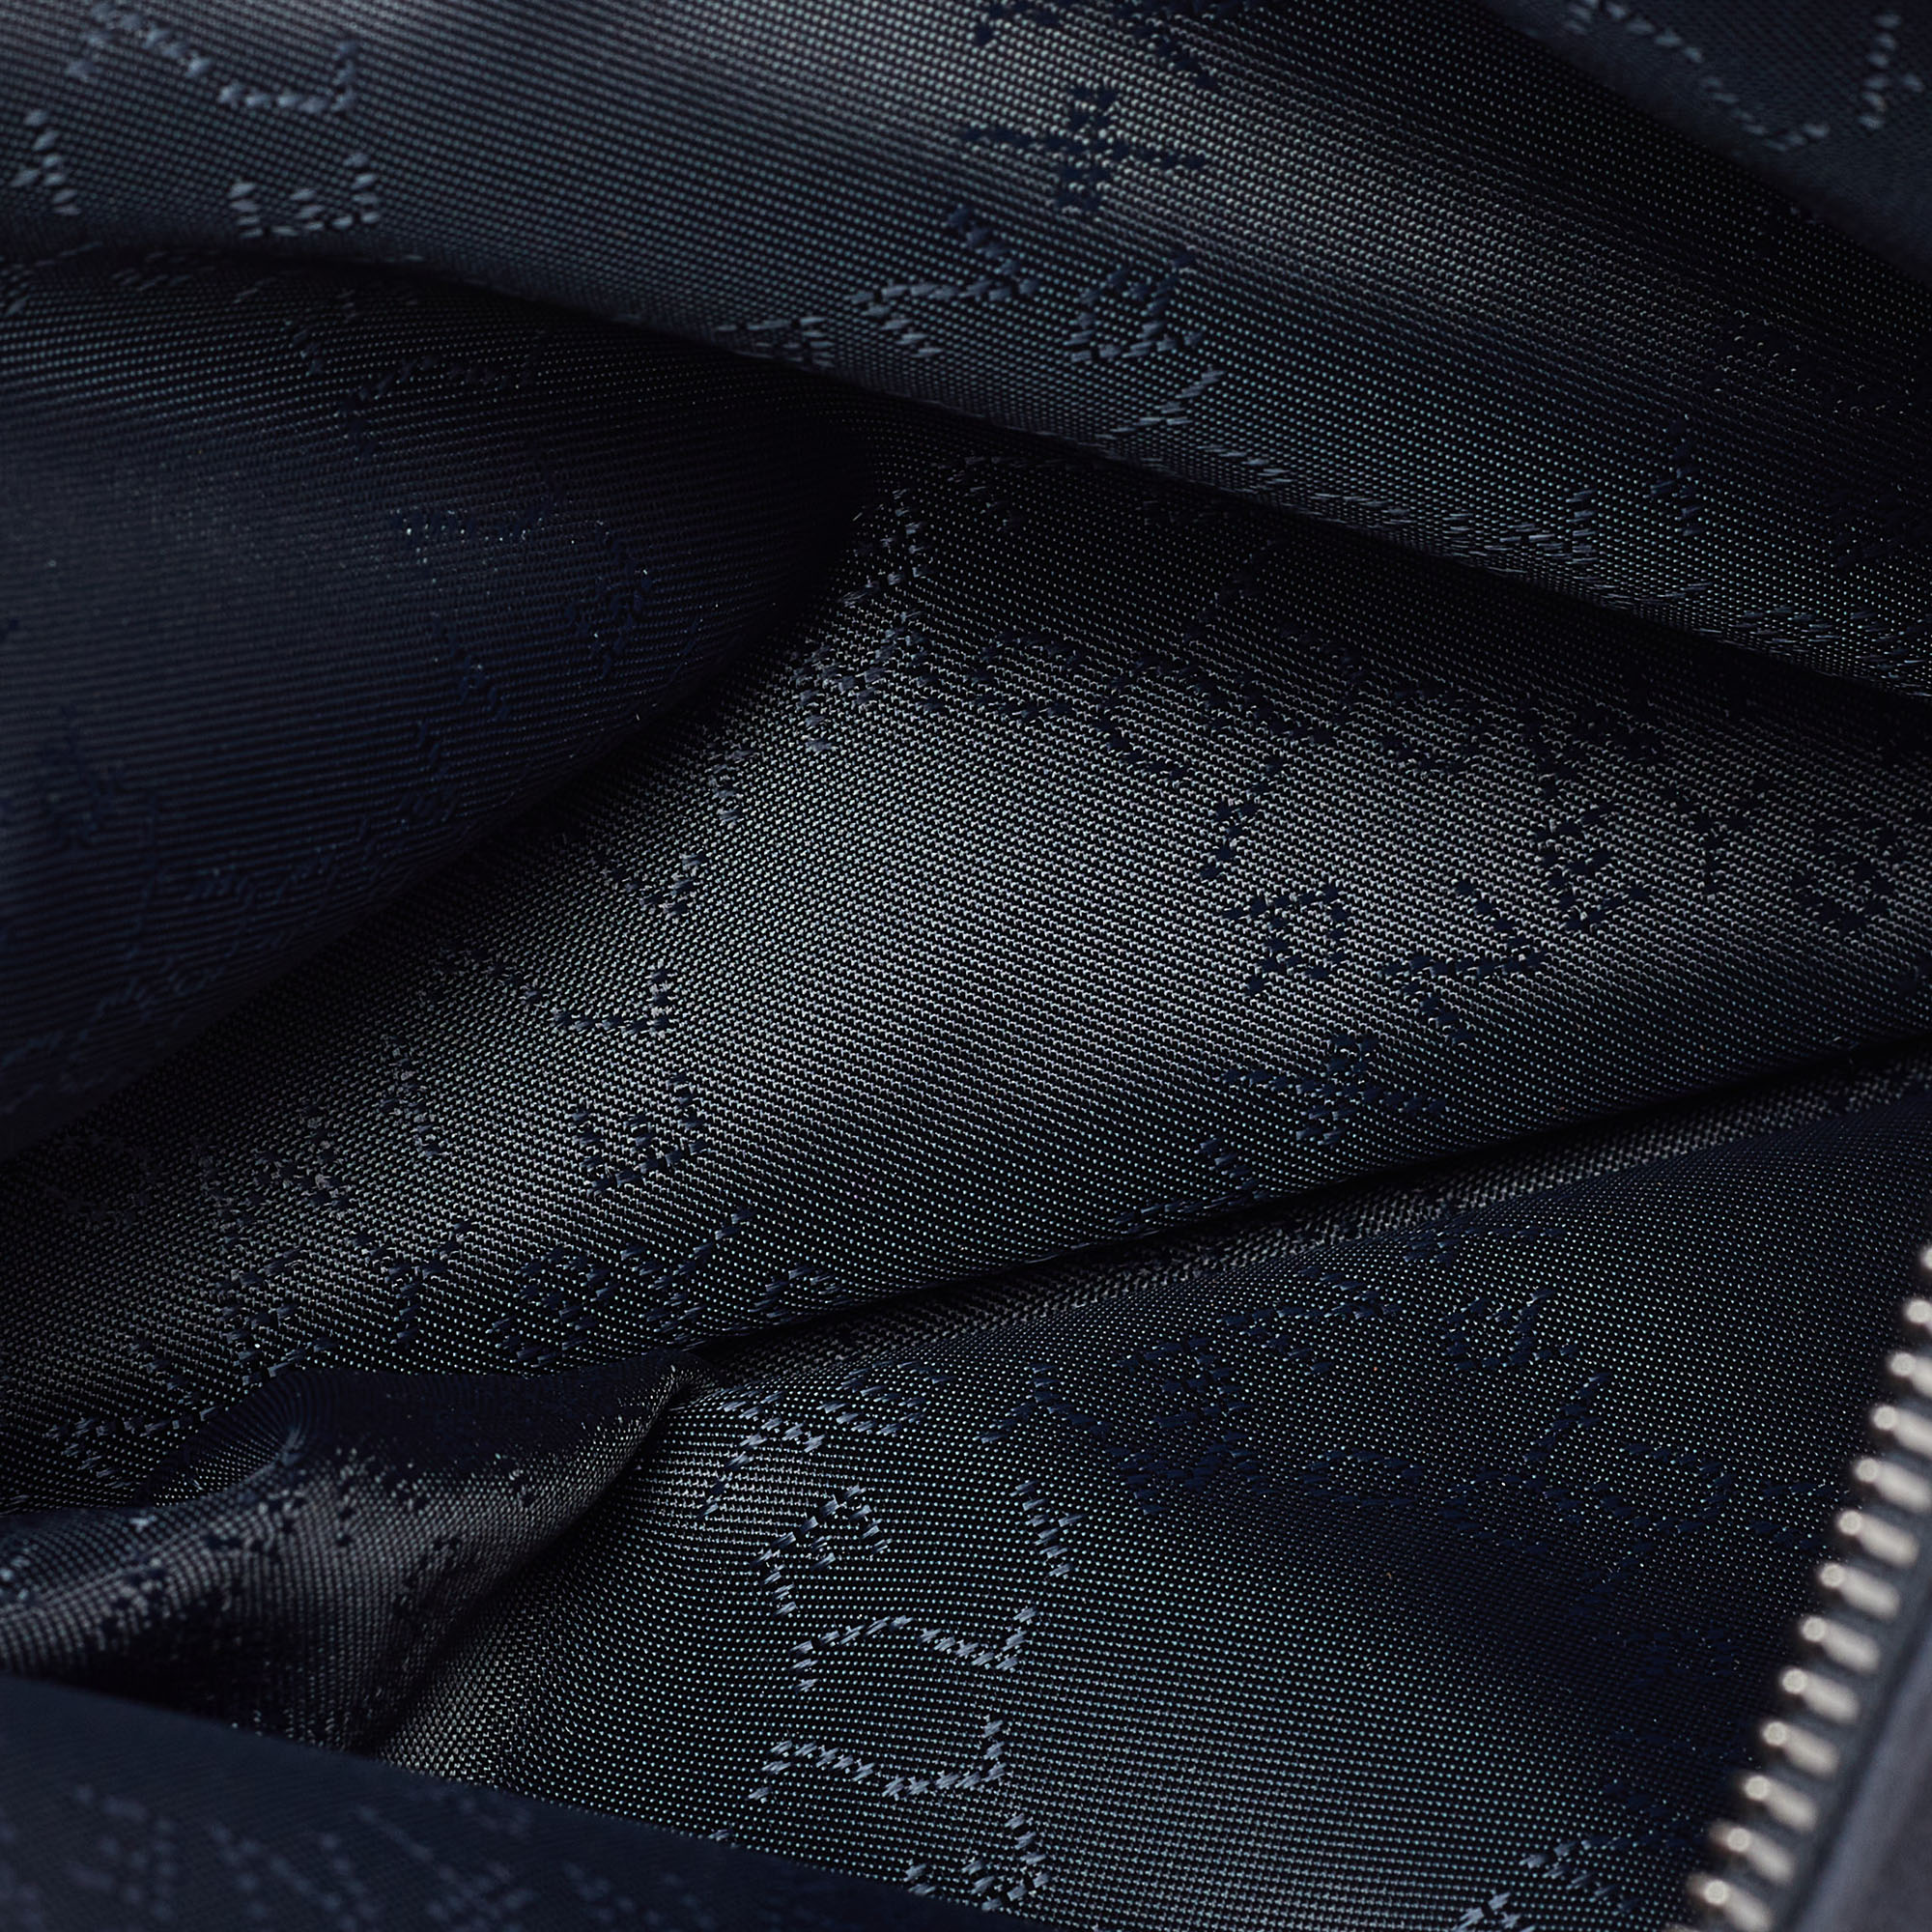 Stella McCartney Black Faux Leather Studded Embellished Foldover Clutch